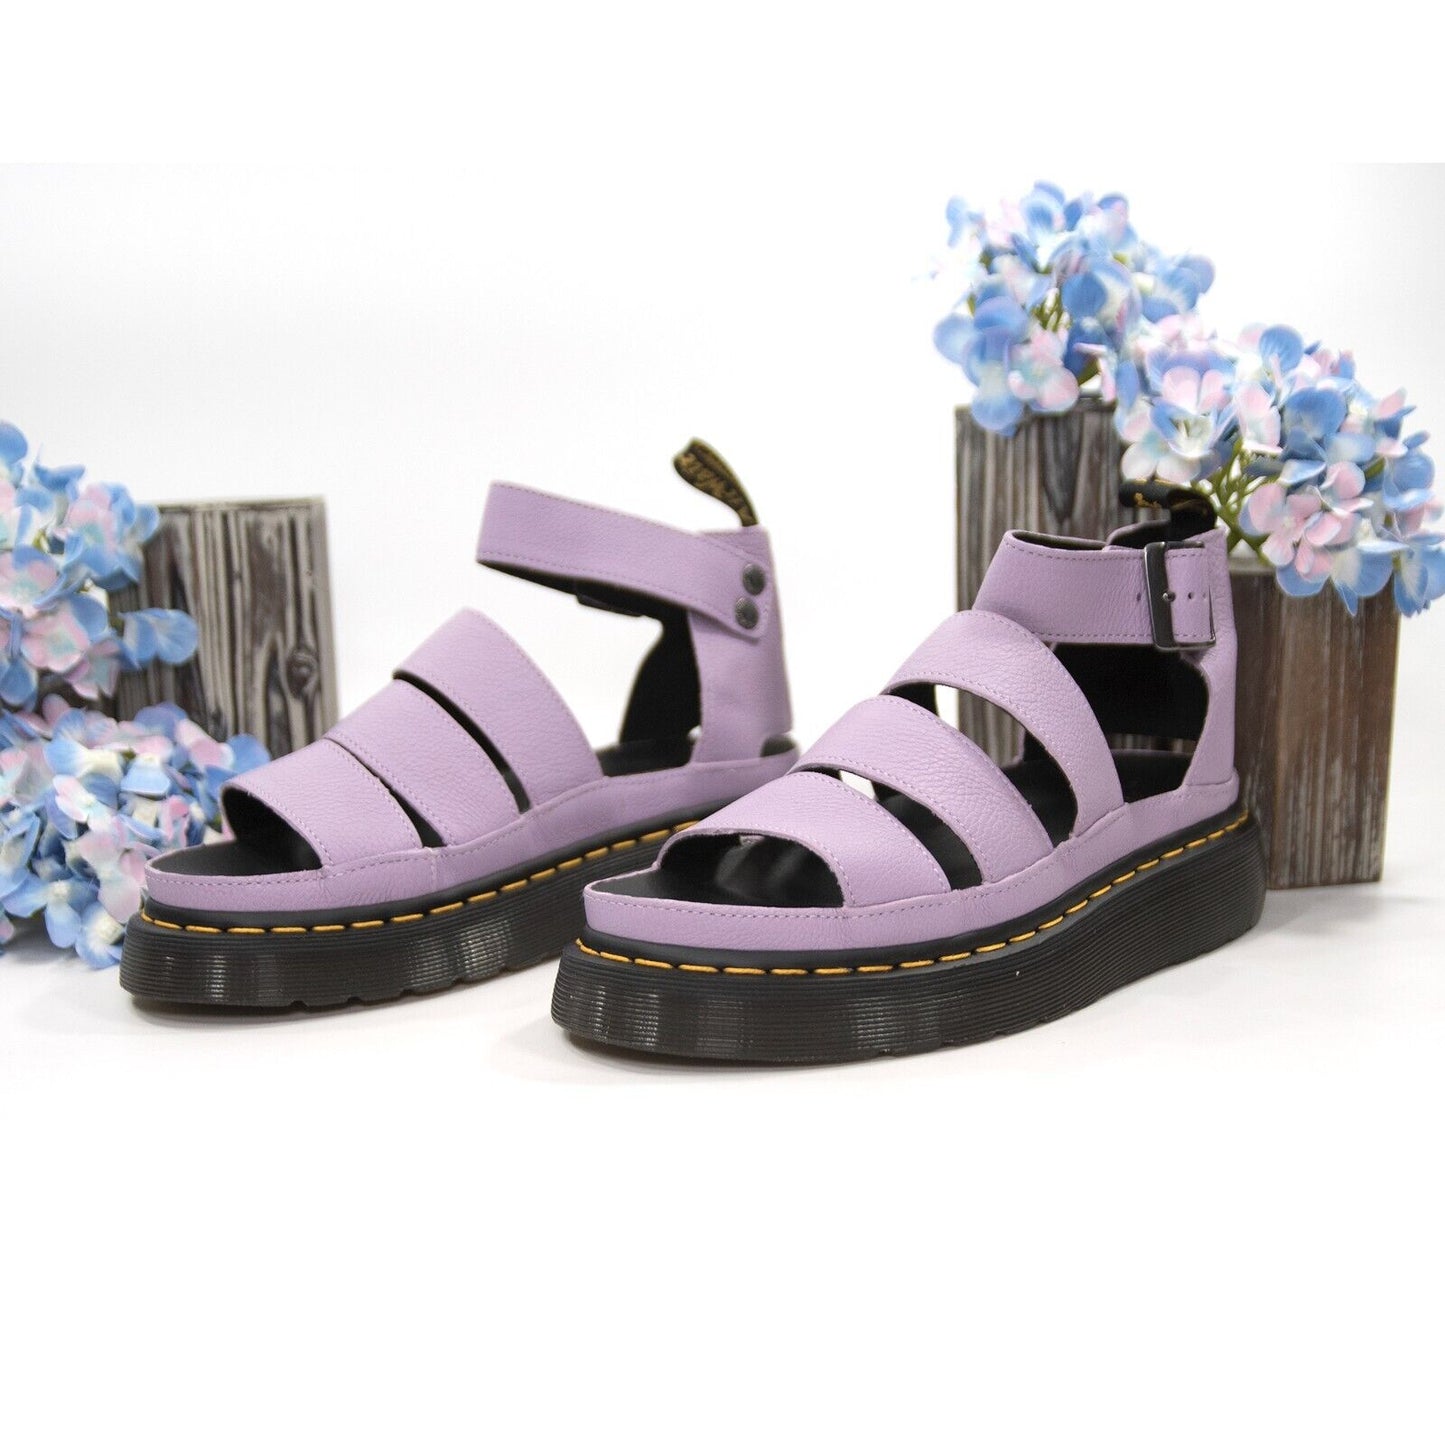 Dr. Martens Lilac Leather Clarissa 2 Quad Gladiator Sandal Shoes Size 9 NIB